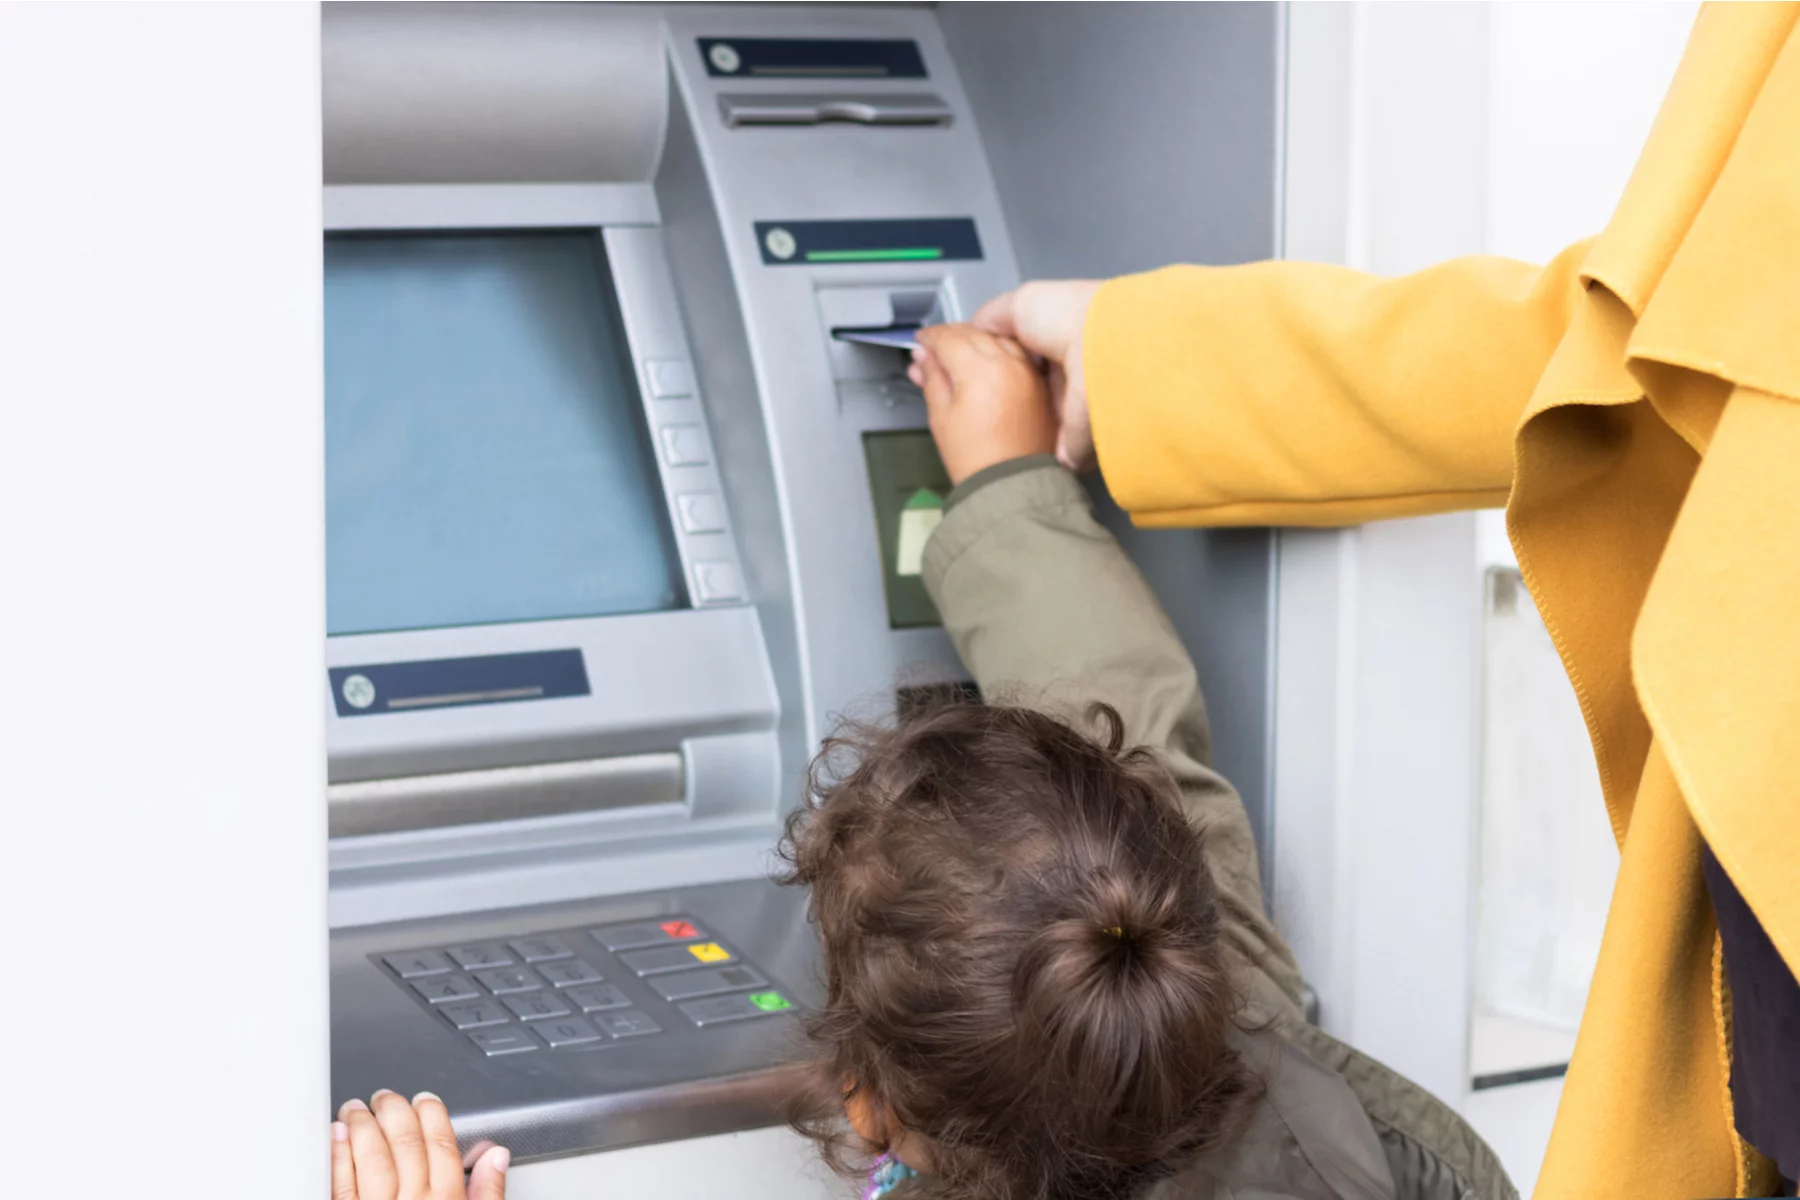 Child using ATM